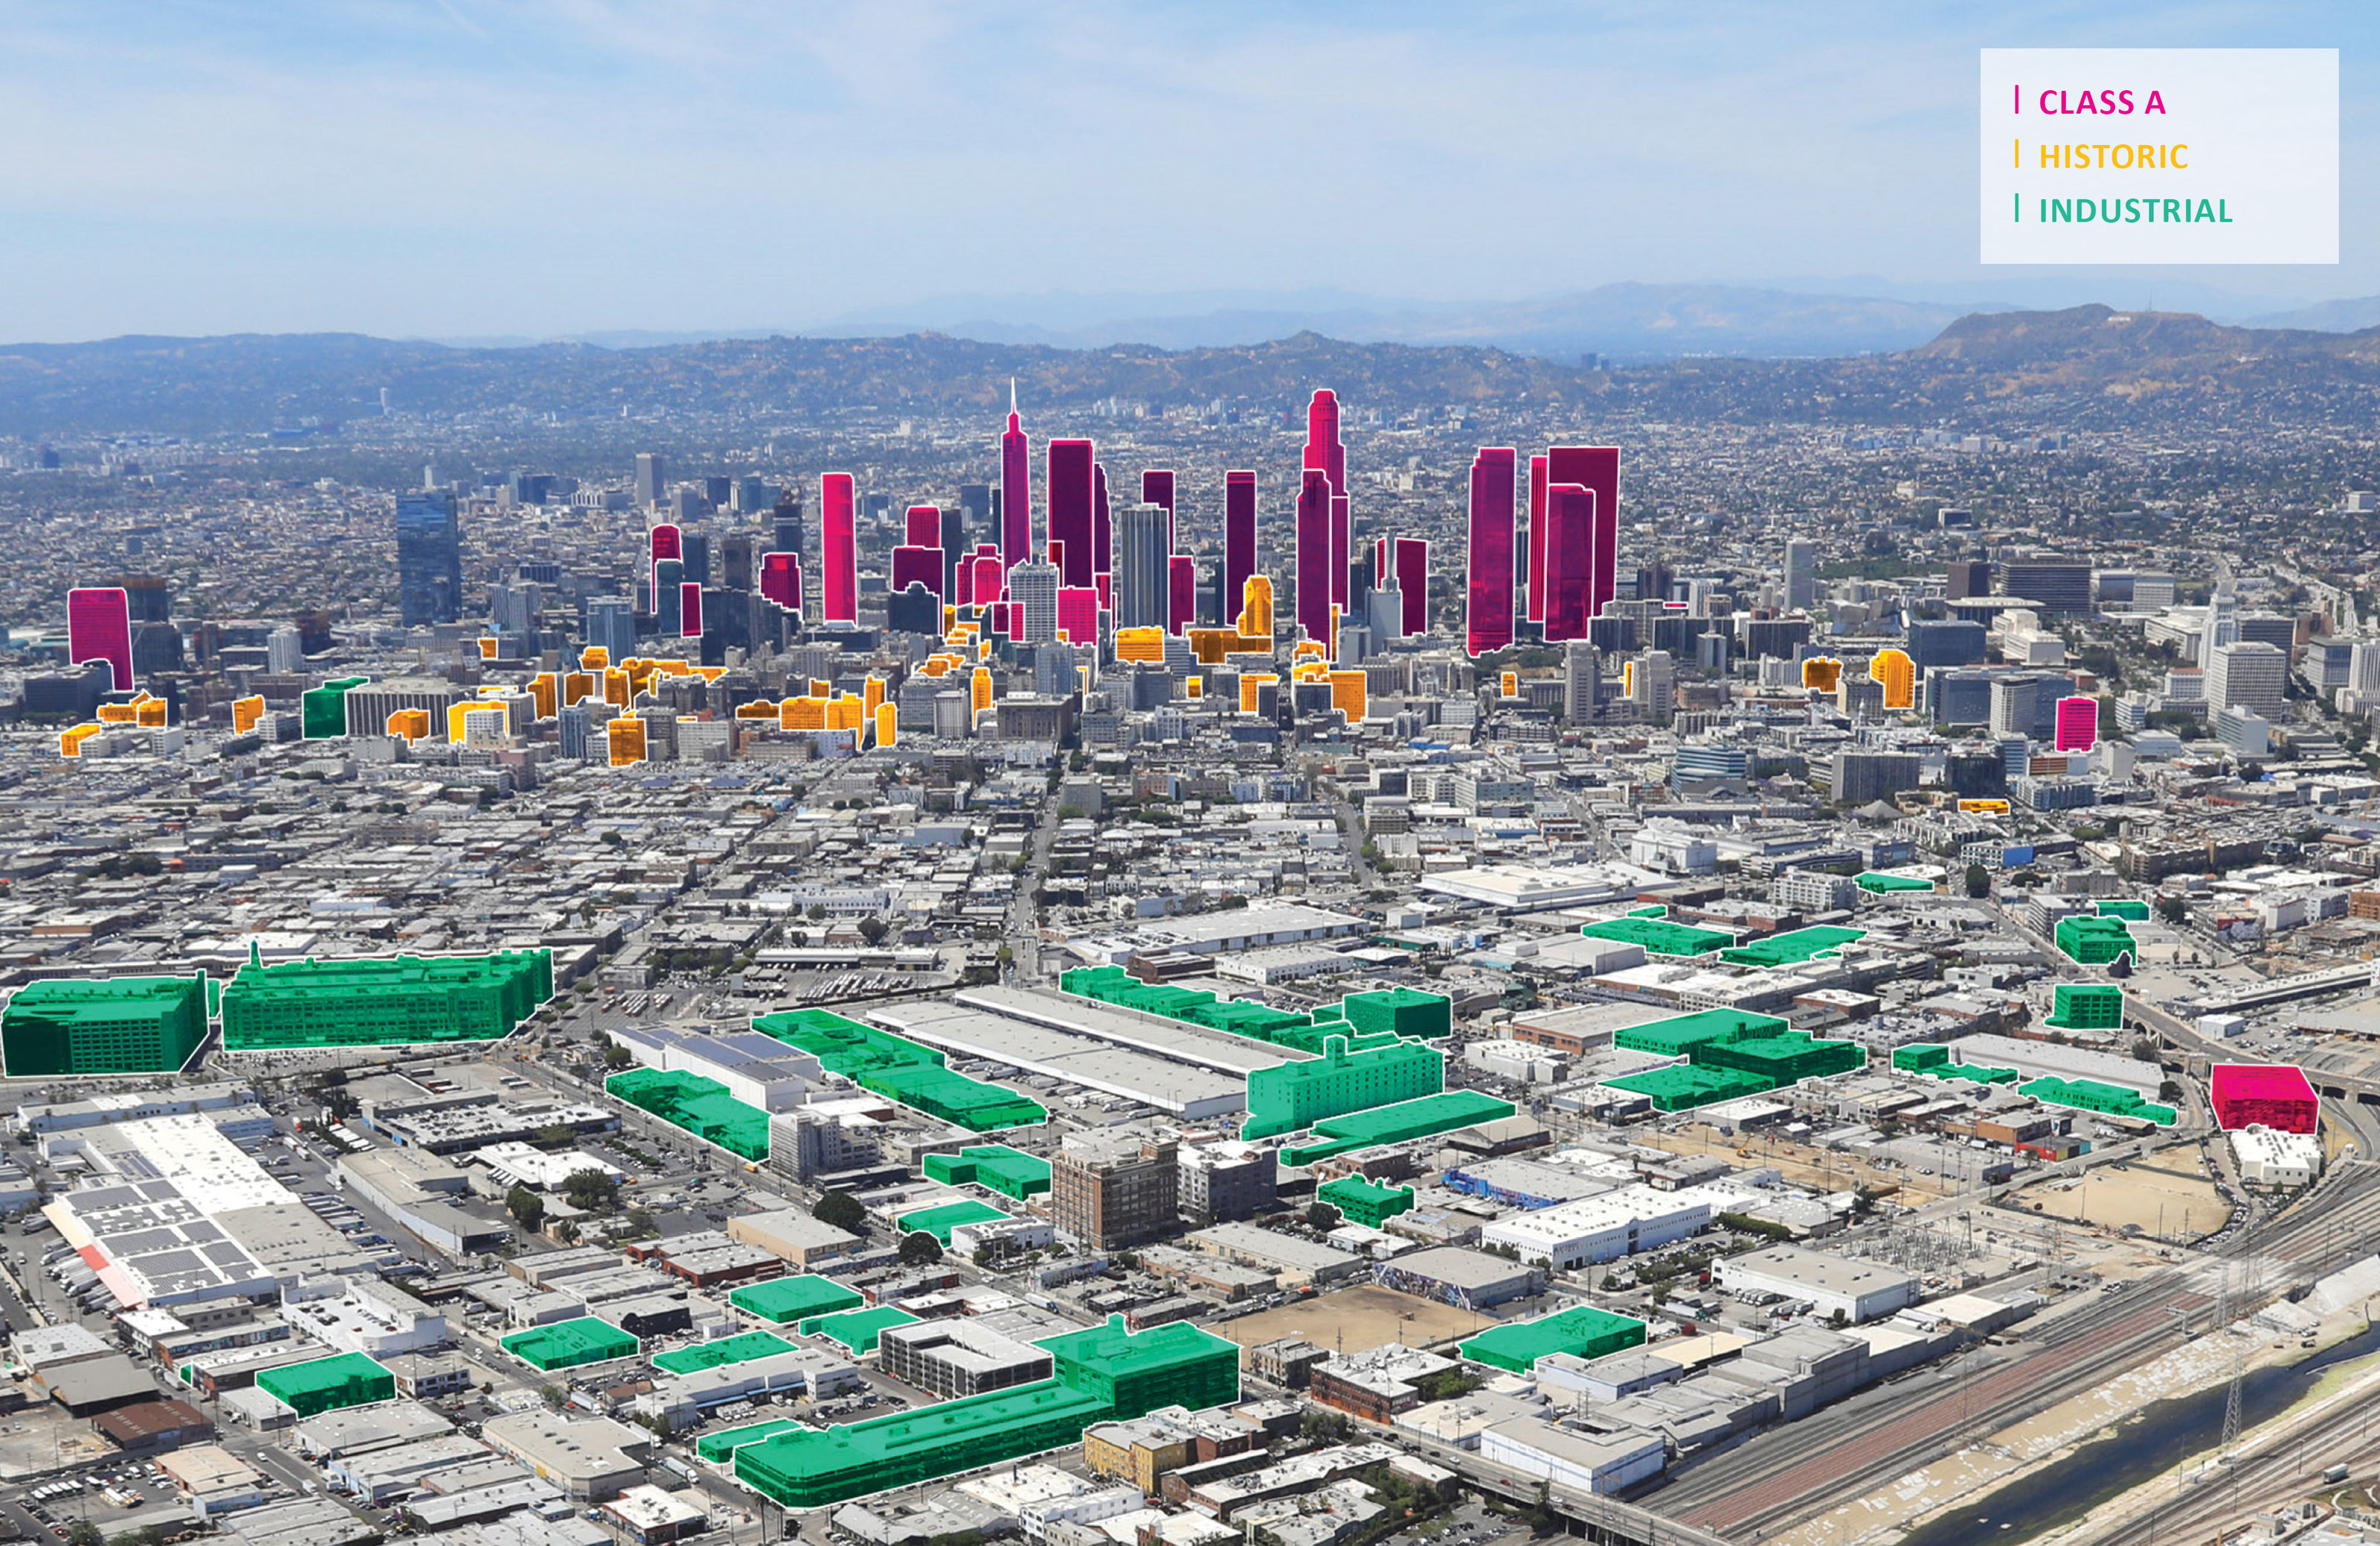 Building Map of Downtown LA